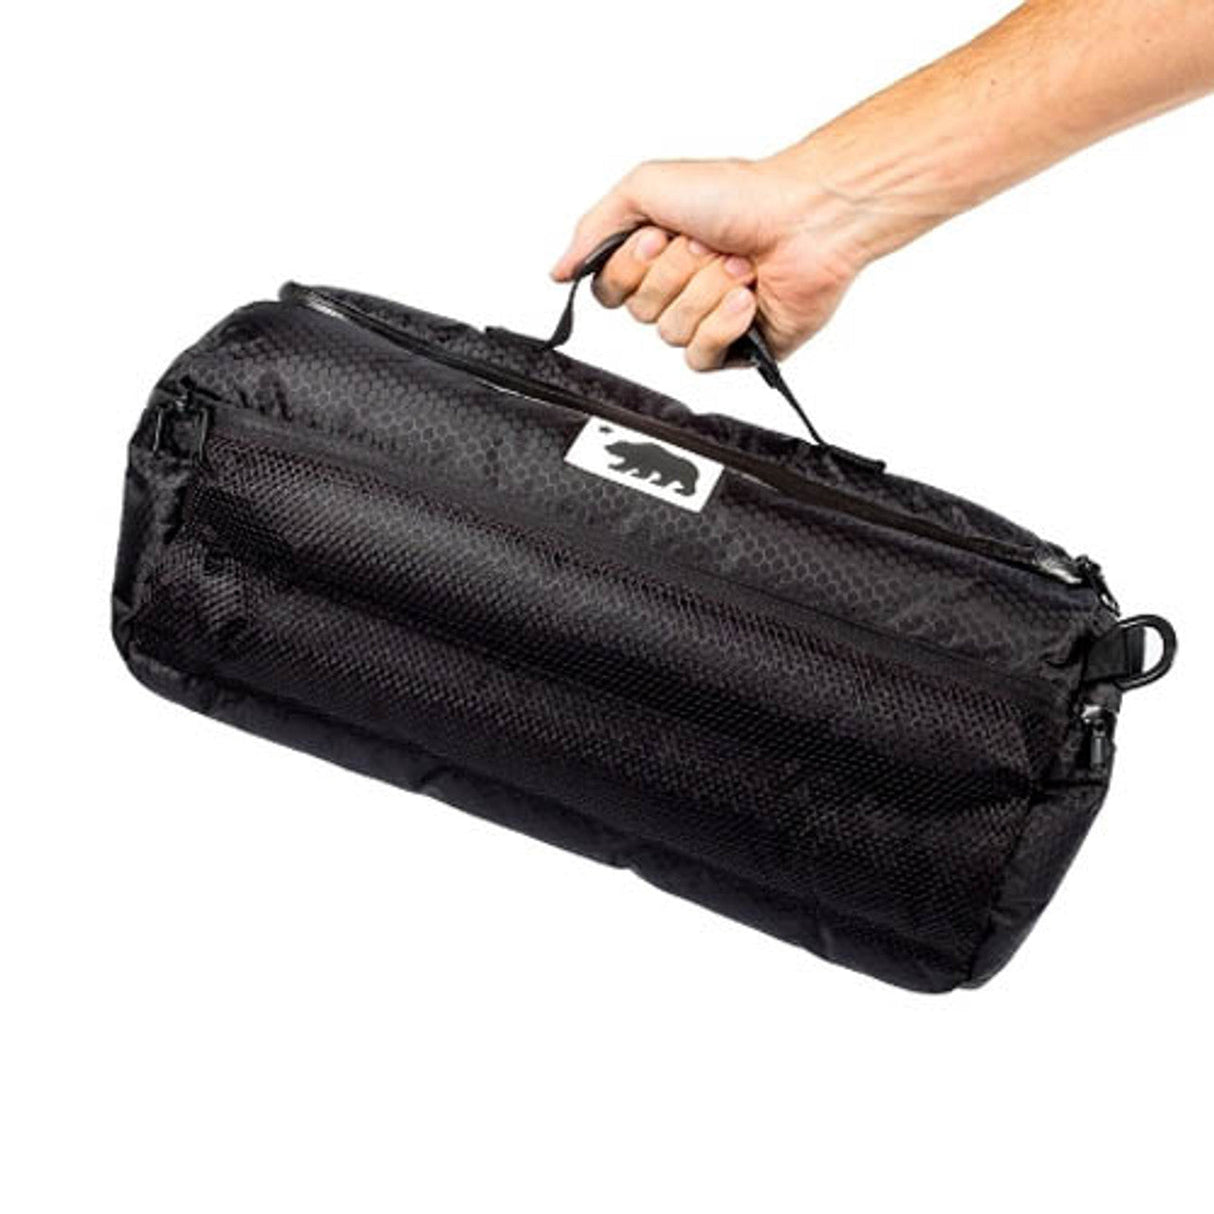 Cali Duffle 16" Standard by Cali Crusher, black silicone duffel bag, held in hand, side view